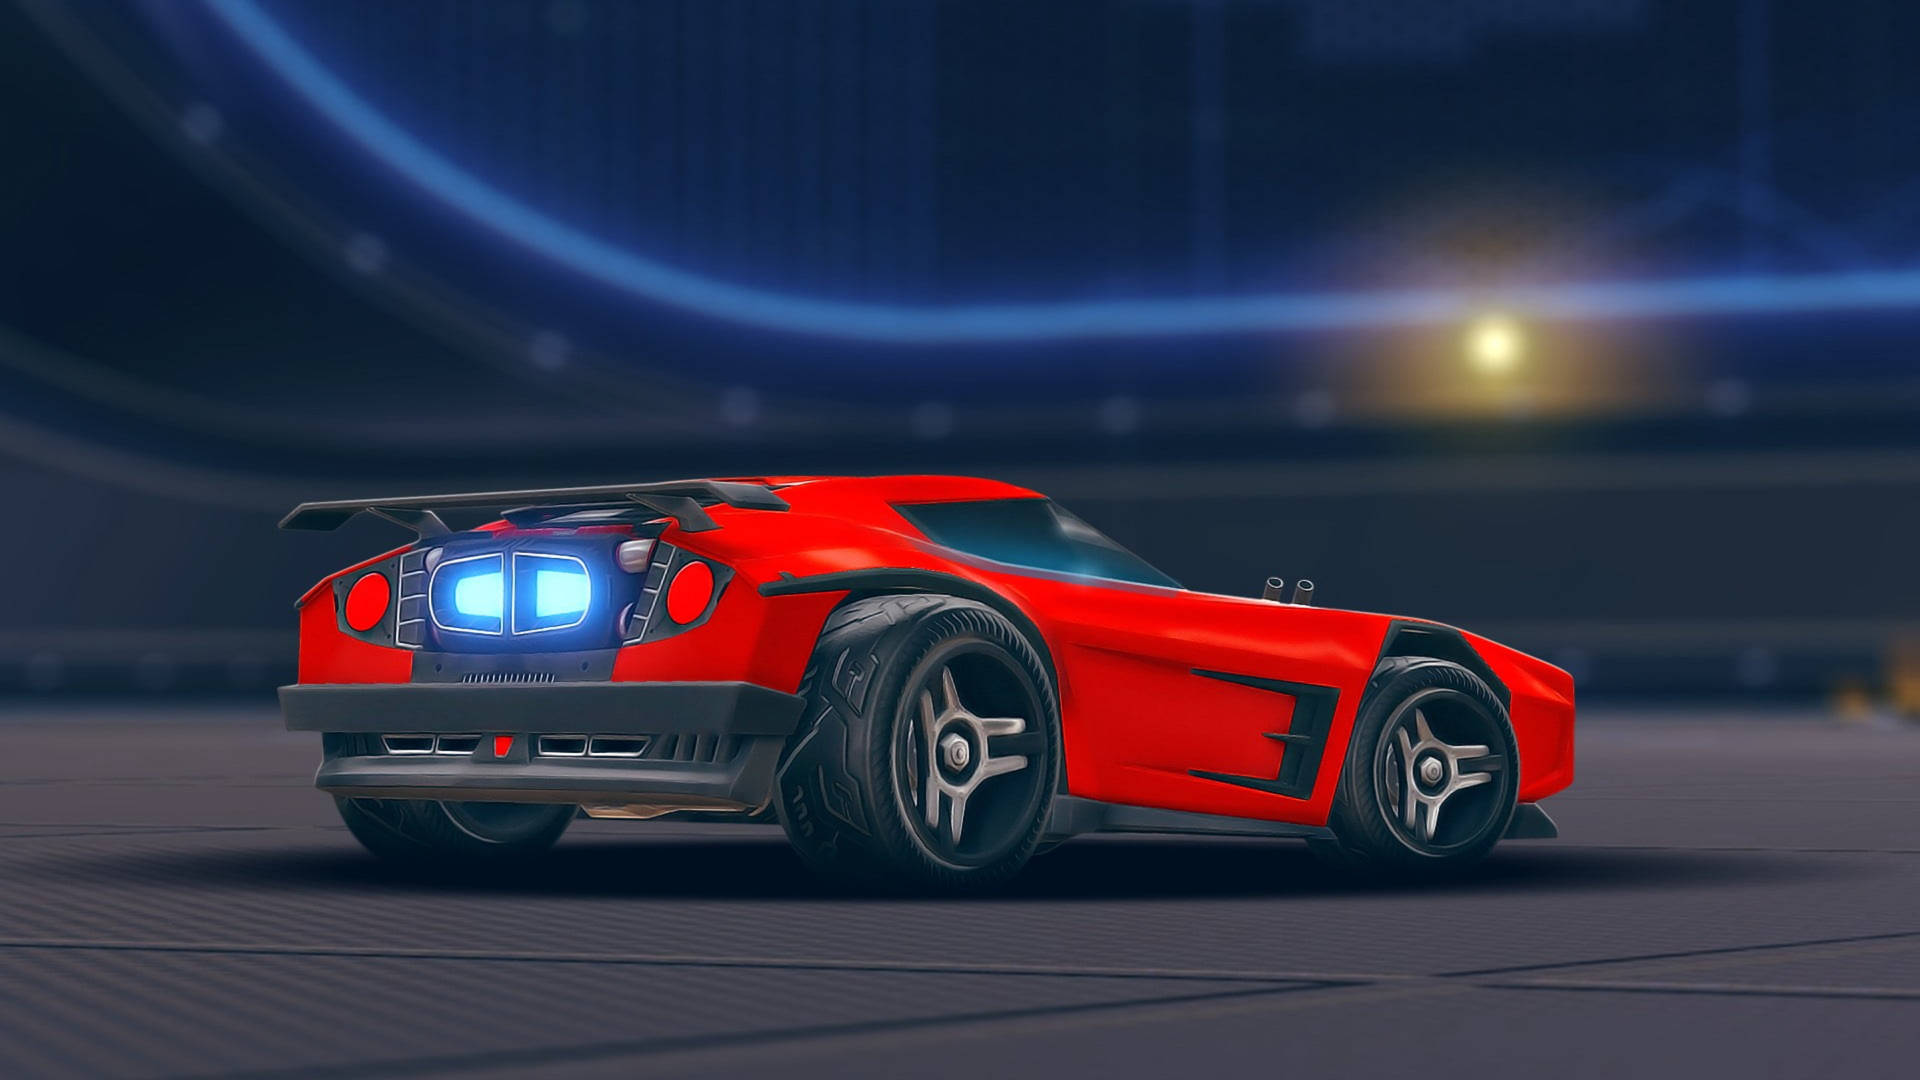 Rocket League Hd Red Car